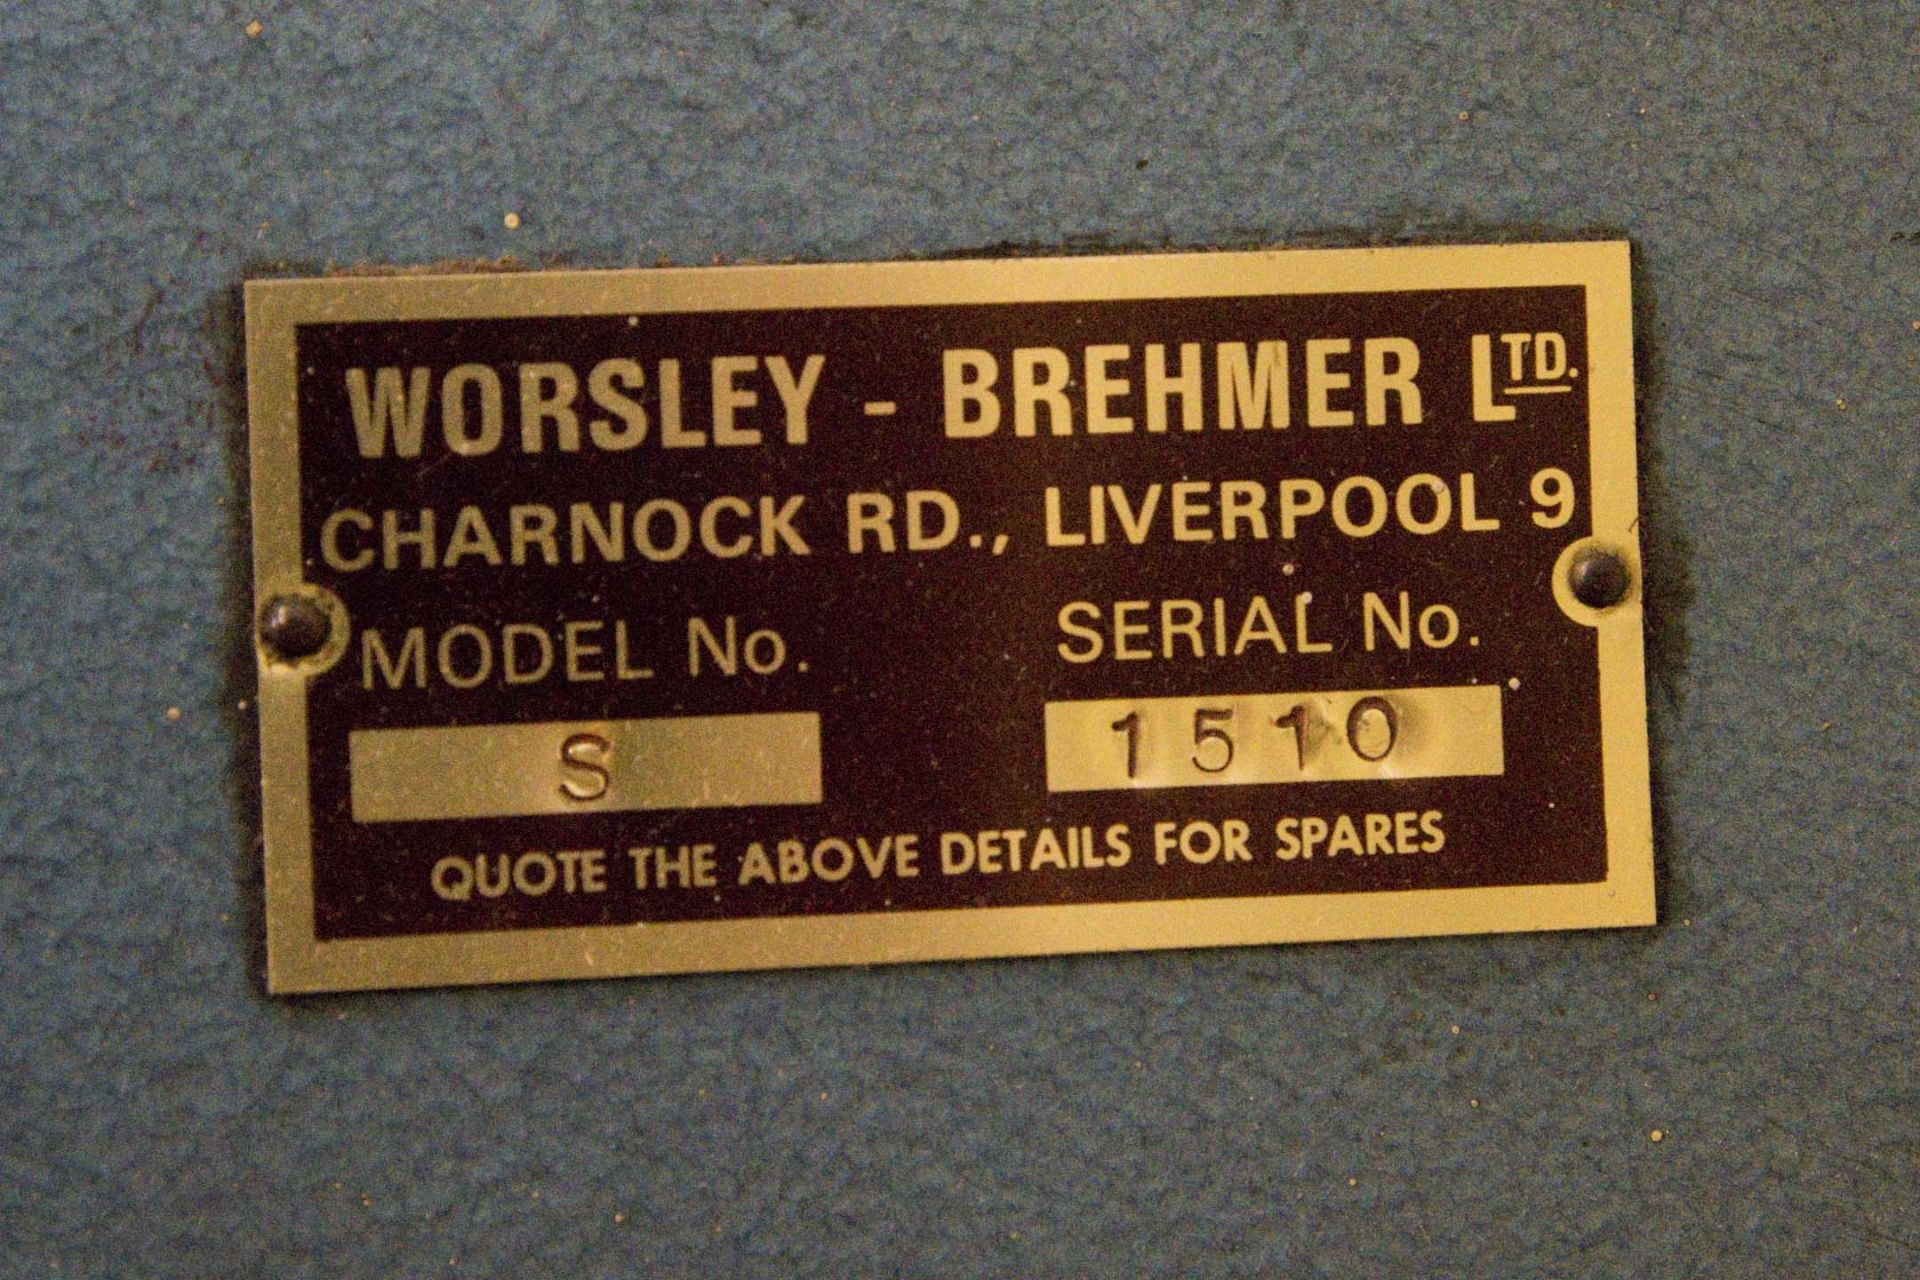 Worsley Brehmer heavy duty stitcher. Model No. S. Single phase. Serial No. 1510 - Image 2 of 2